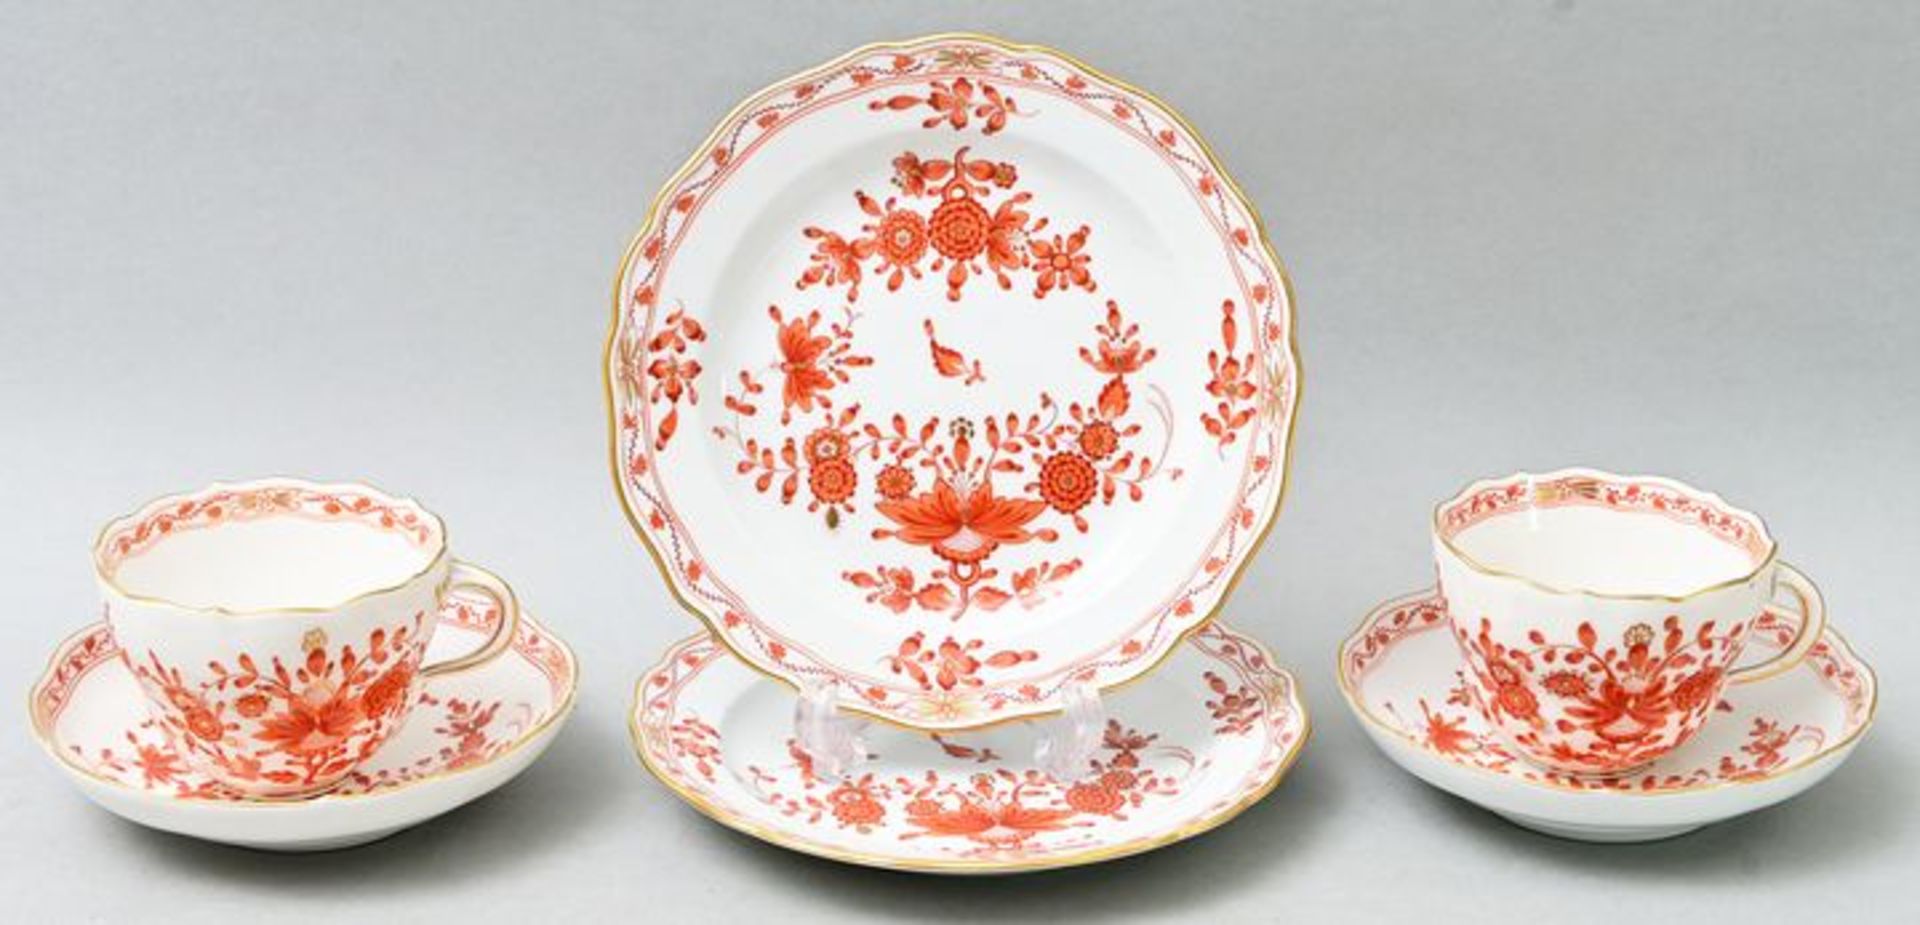 Gedecke Meissen/ items porcelain